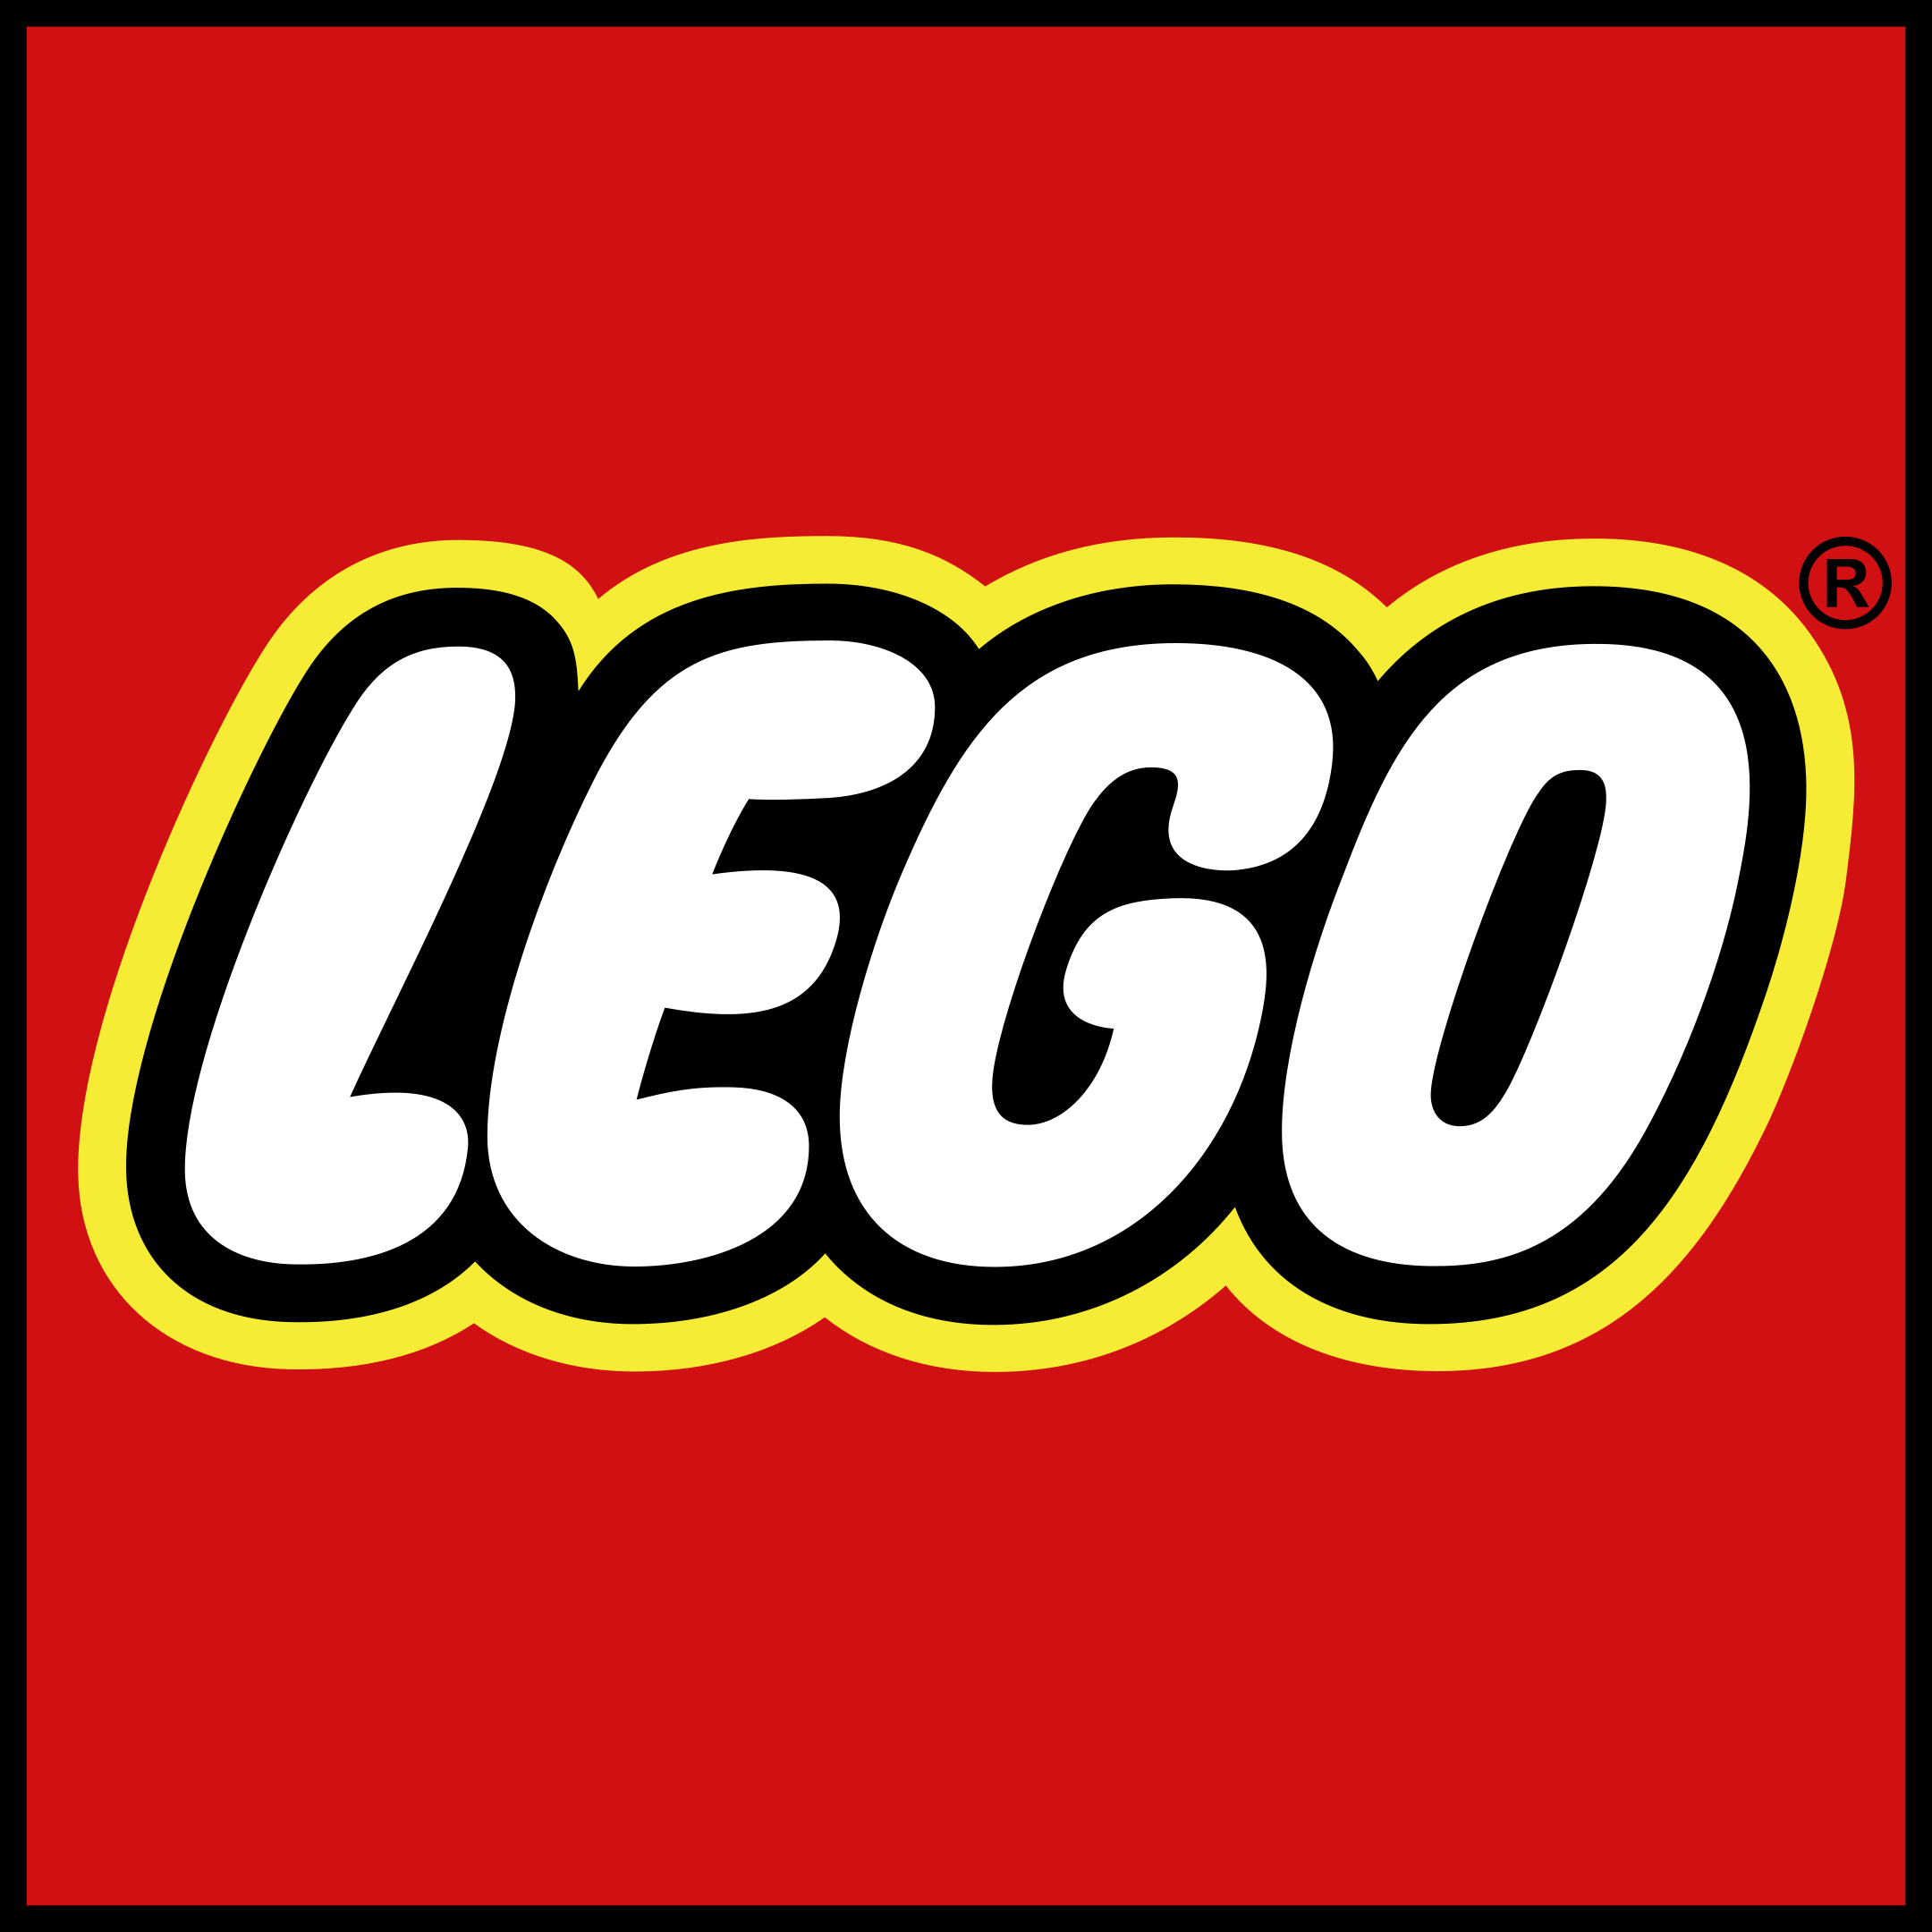 lego logo 1 1 - LEGO Logo